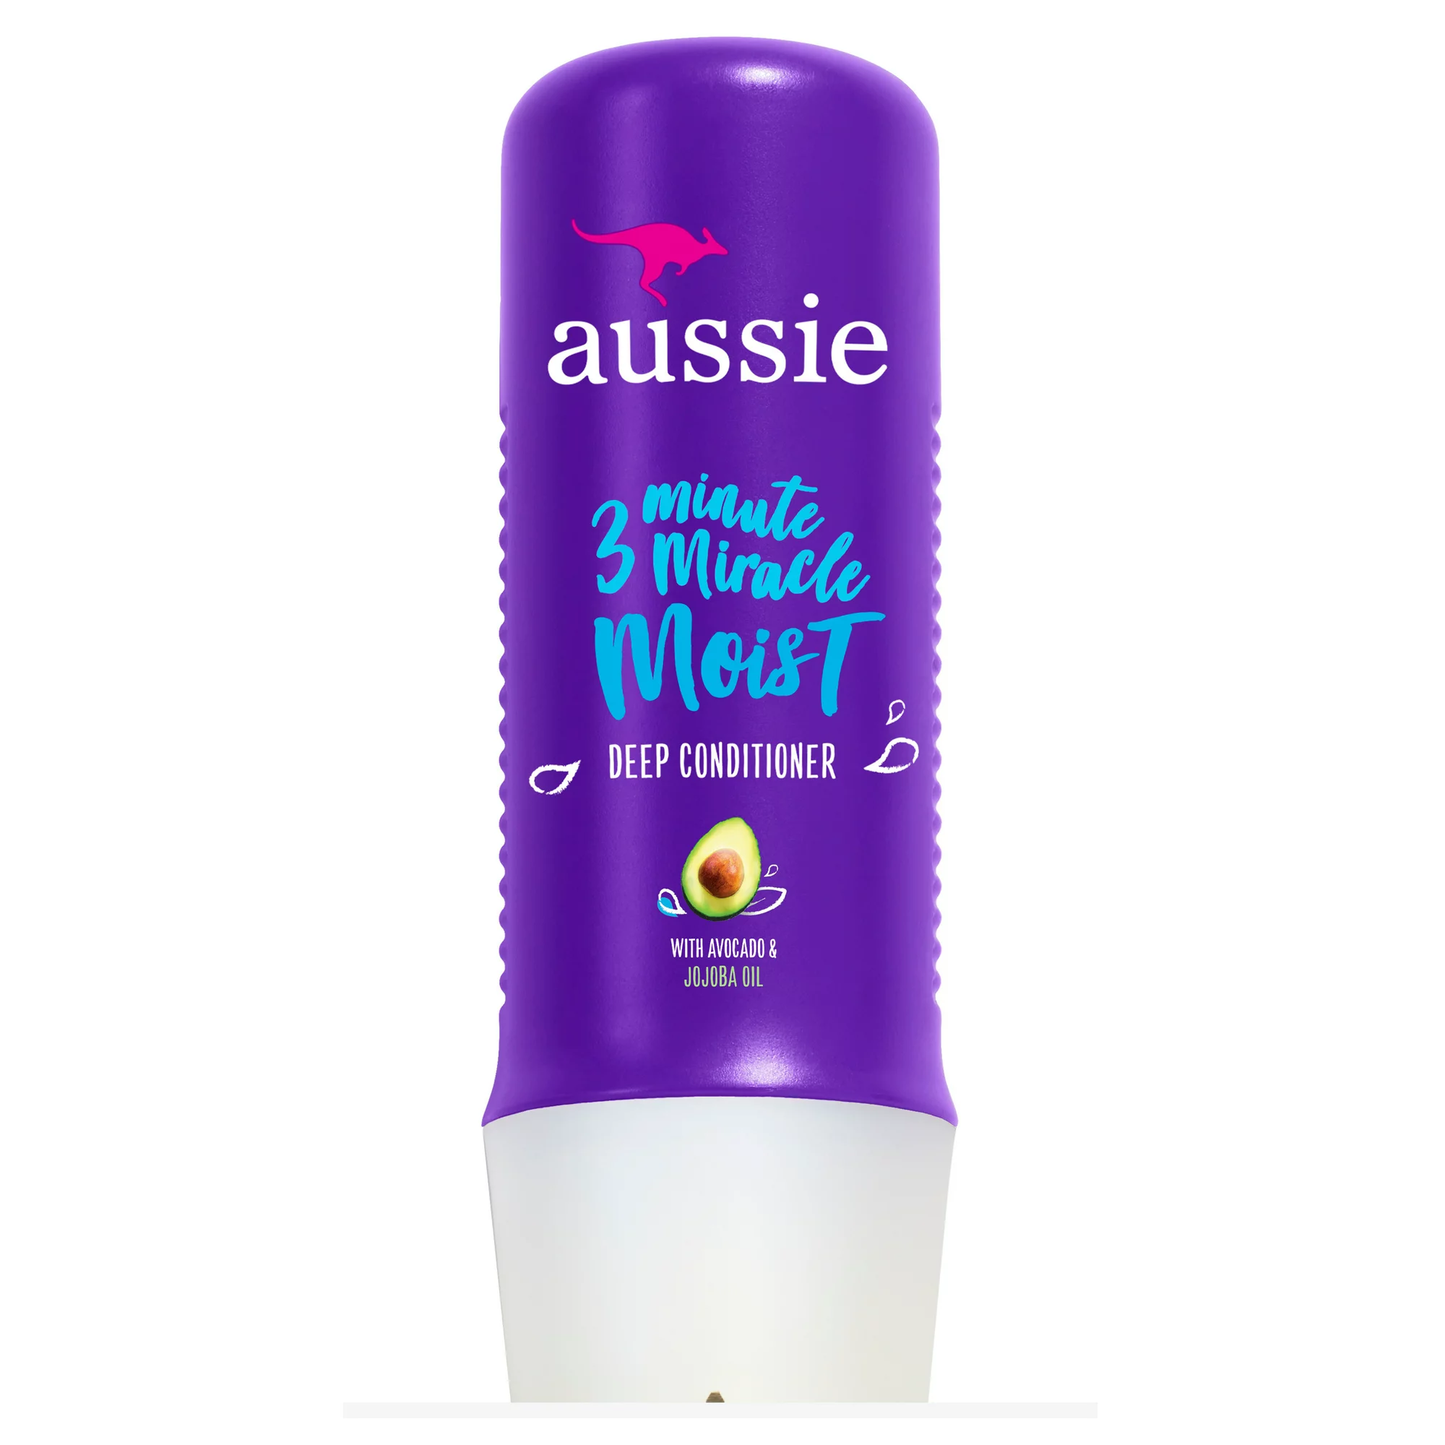 Aussie 3 Minute Miracle Moist Deep Conditioner 8 oz